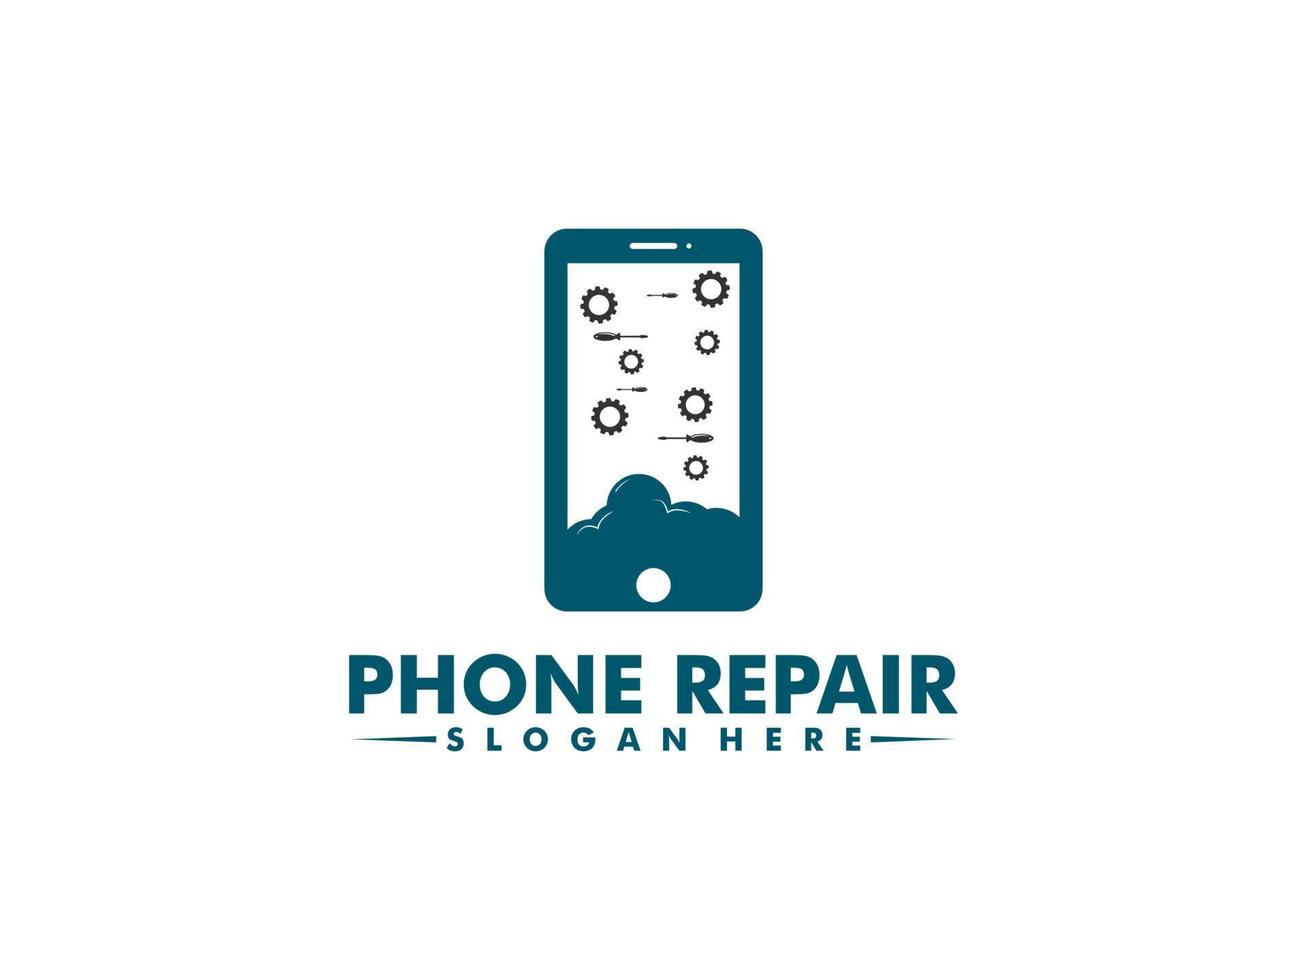 Abstract Phone repair logo, Phone Service logo vector